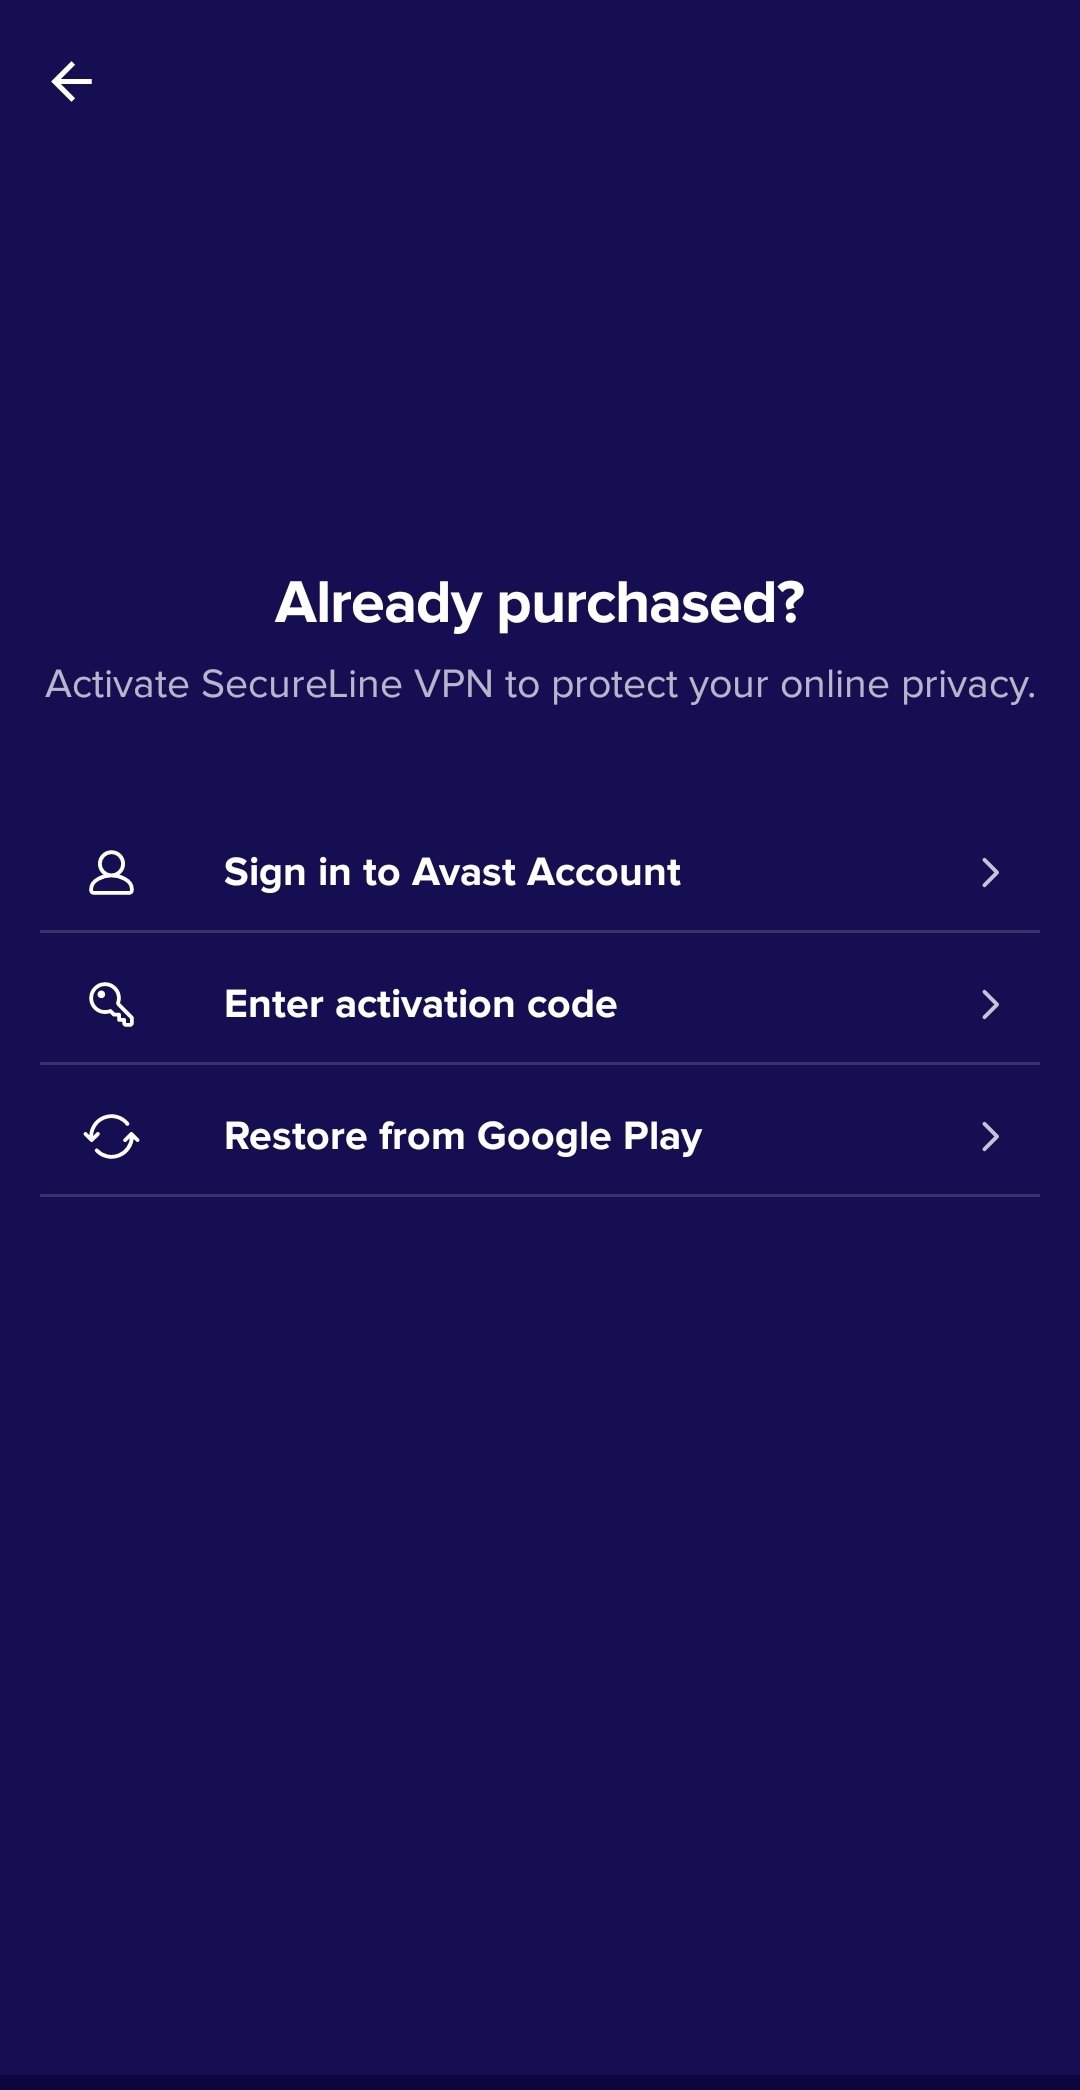 avast secureline vpn for mac iphone